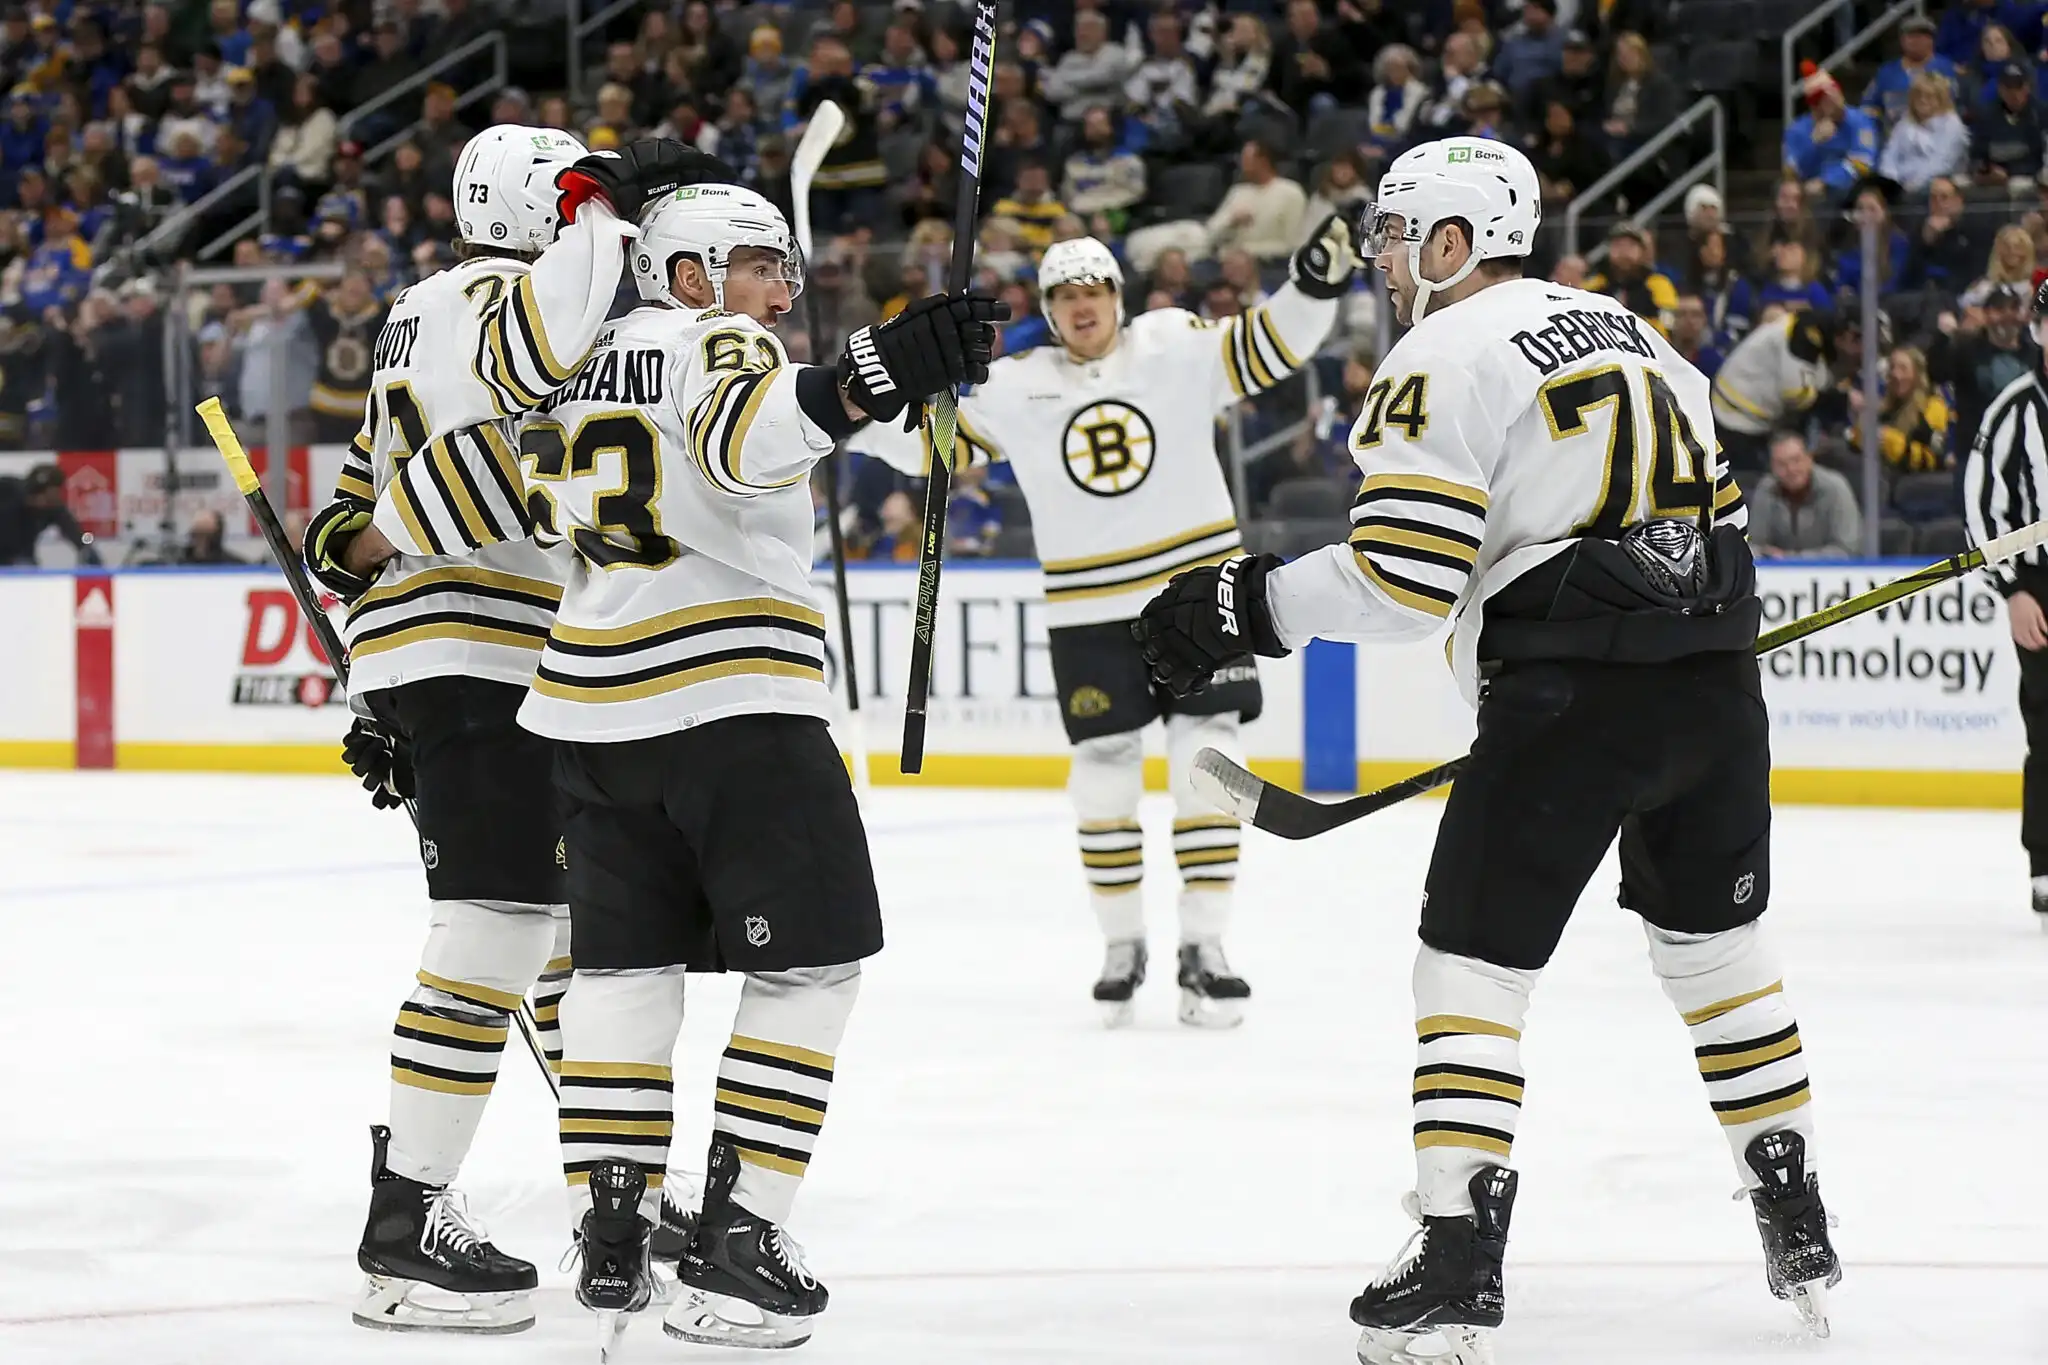 Bruins Senators Preview: Bruins Need To Start Better